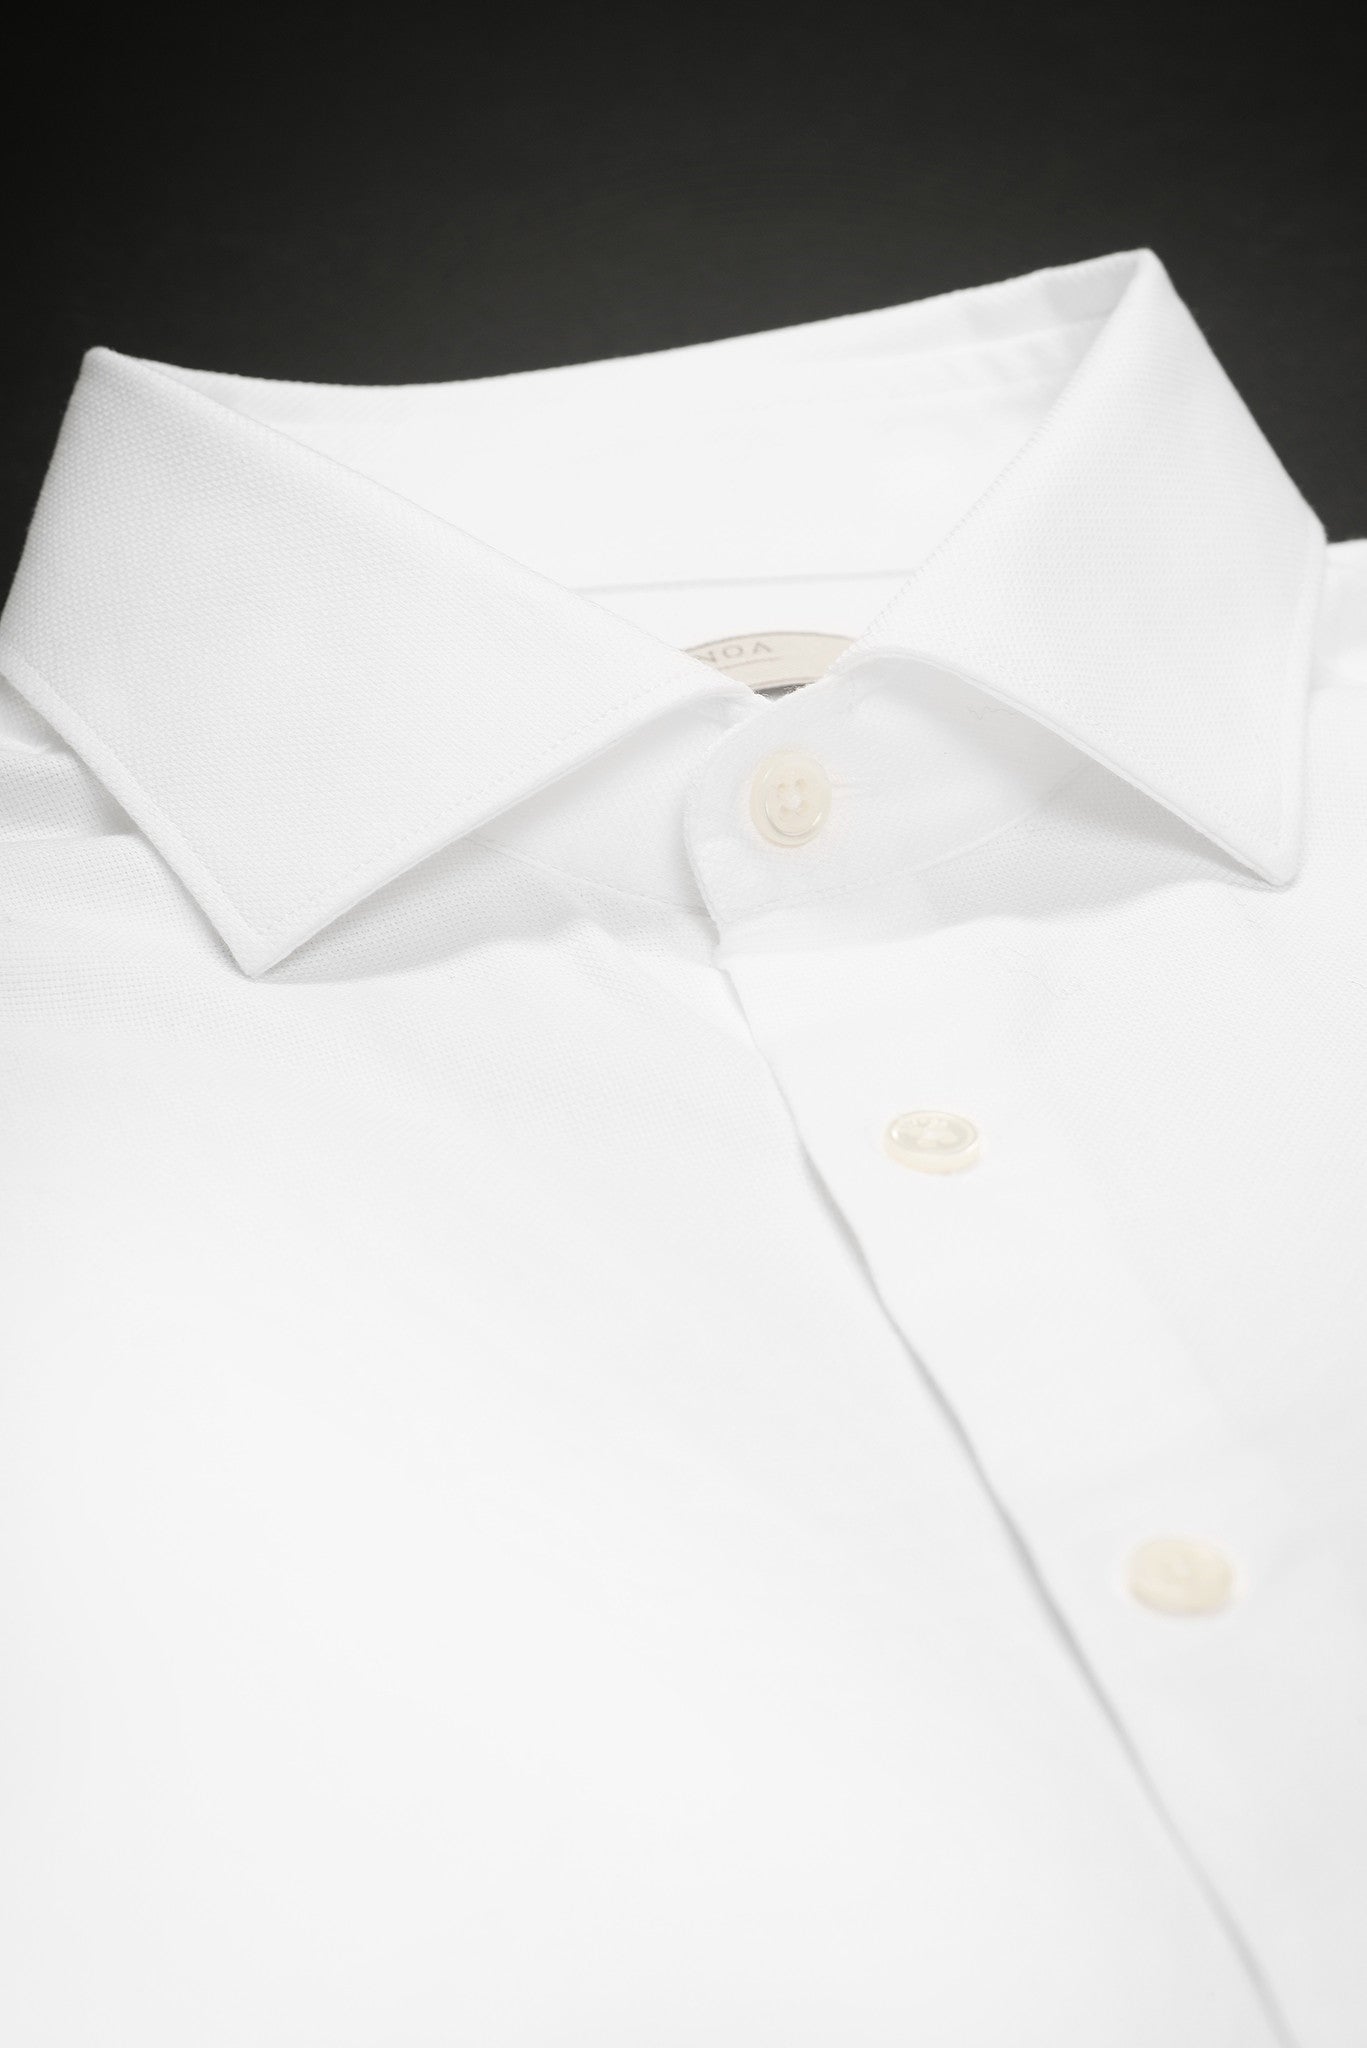 Clamenc shirt (structured cotton)